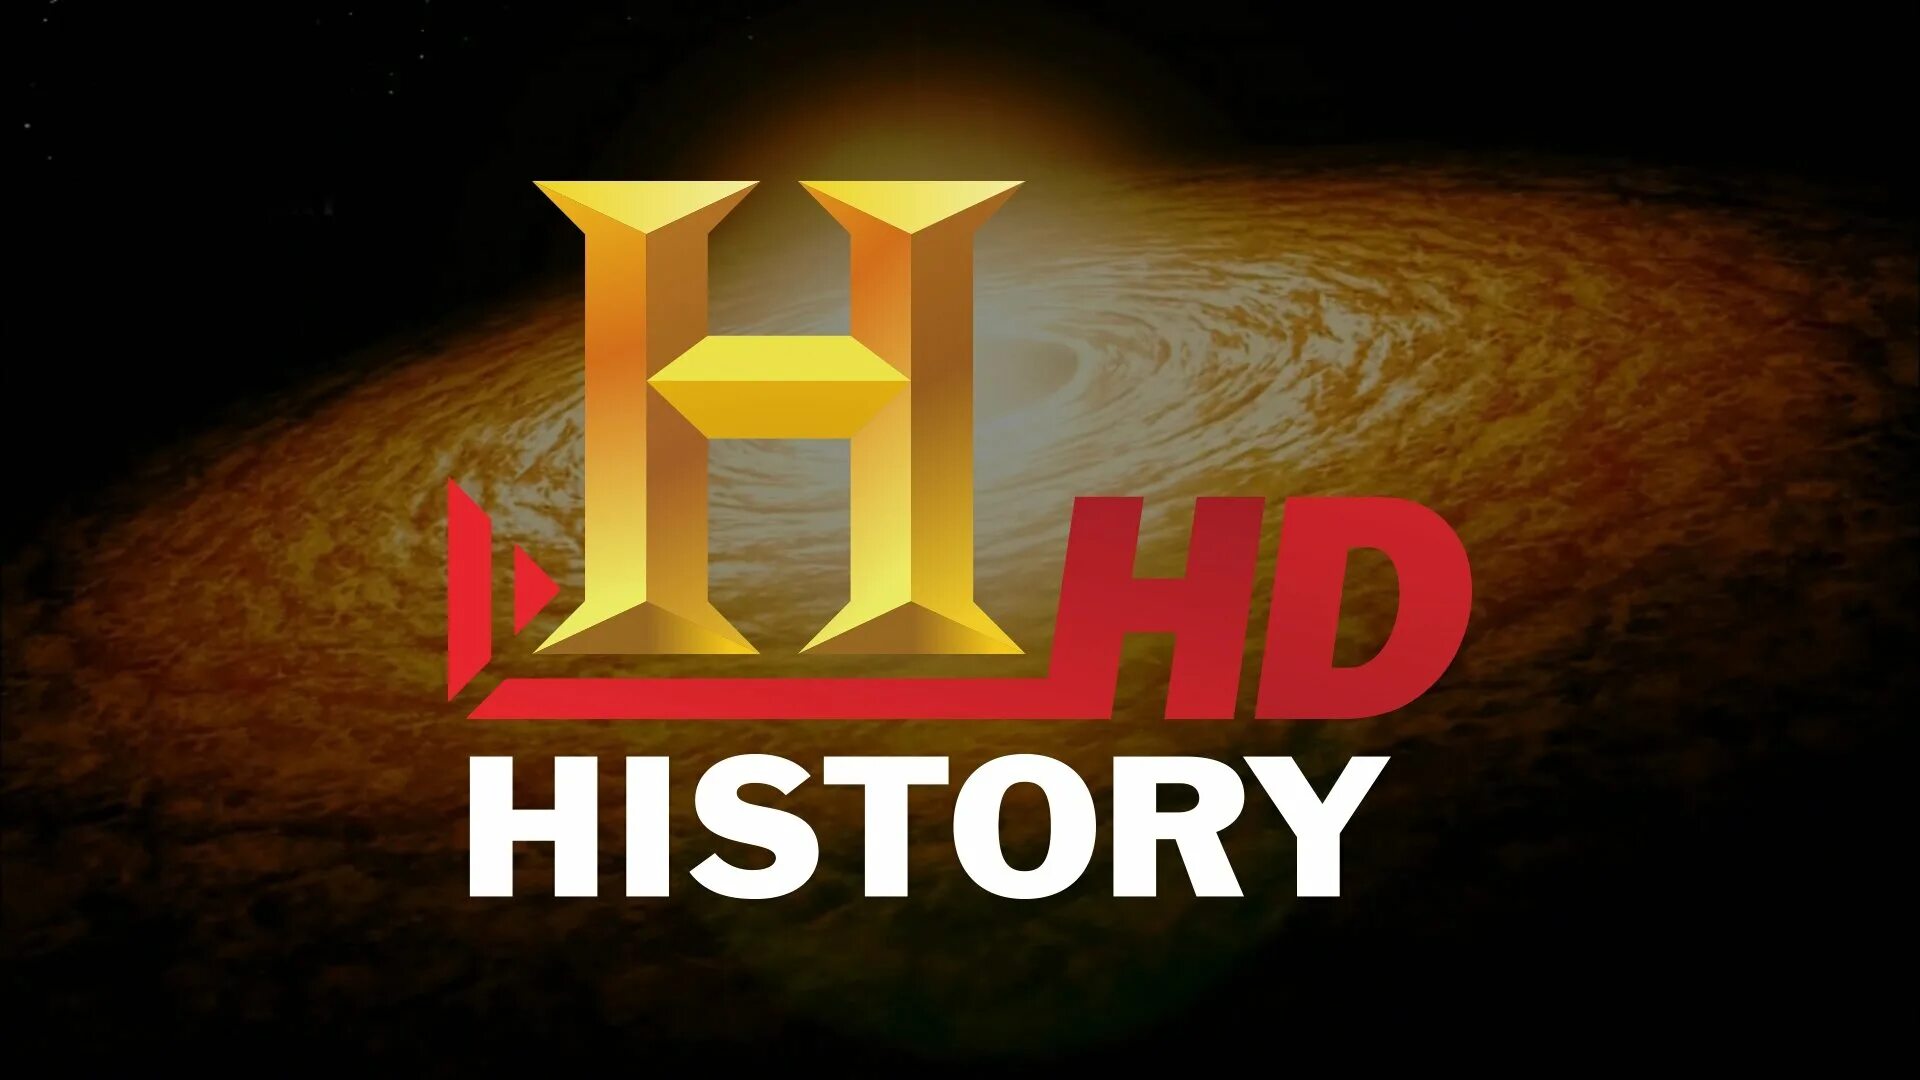 Телеканал History. Телеканал History HD. Логотип the History channel. Логотип телеканала History 2.